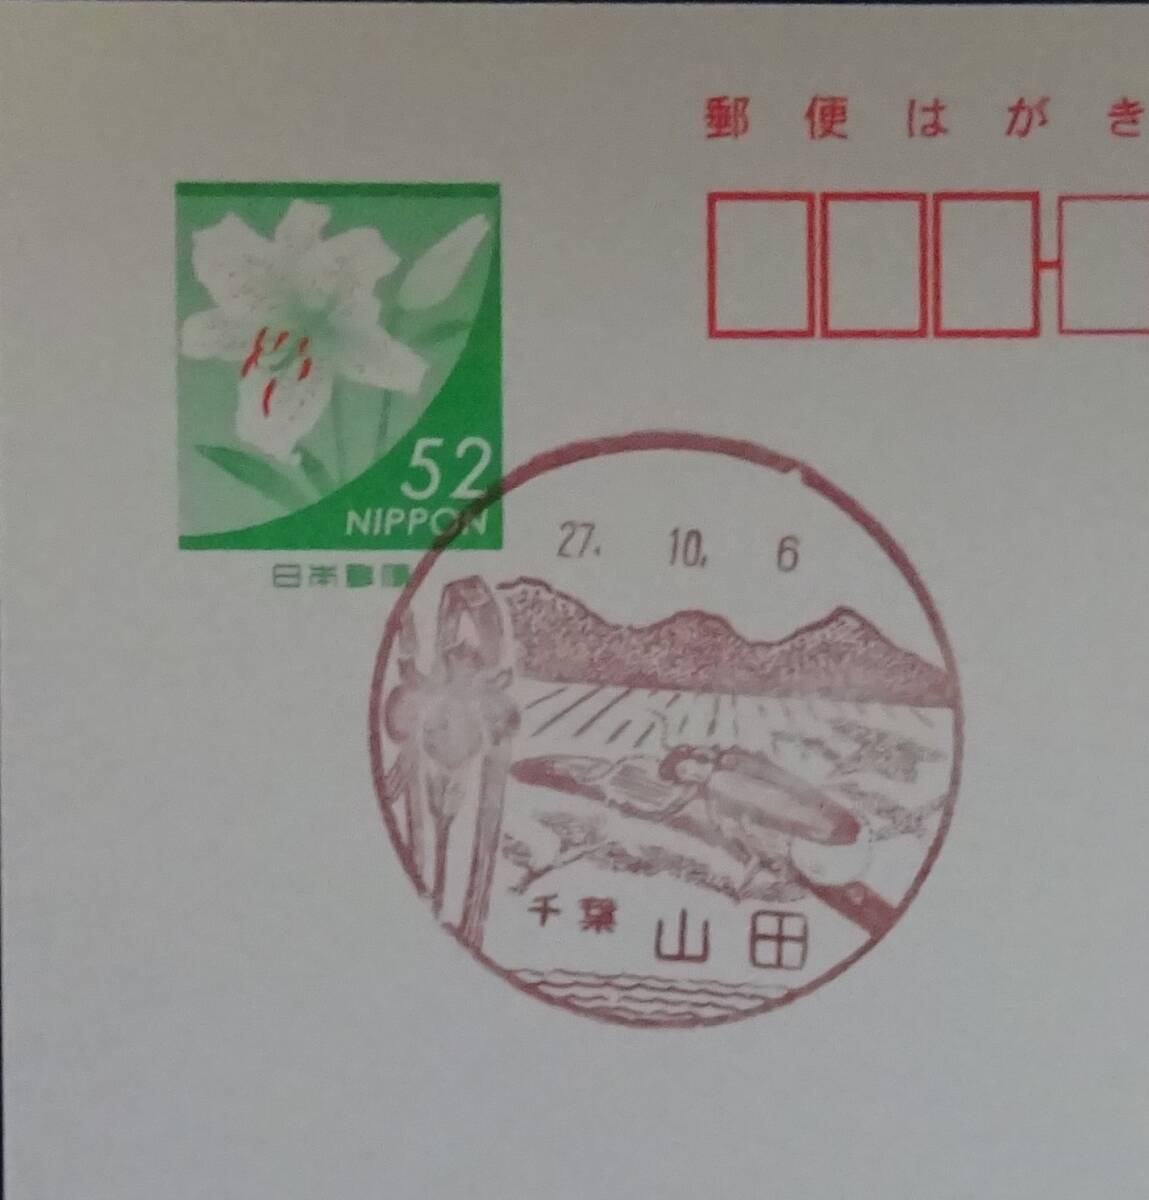 CB ландшафтная печать, префектура Chiba Yamada Bureau Bure Bure Weekday Seal